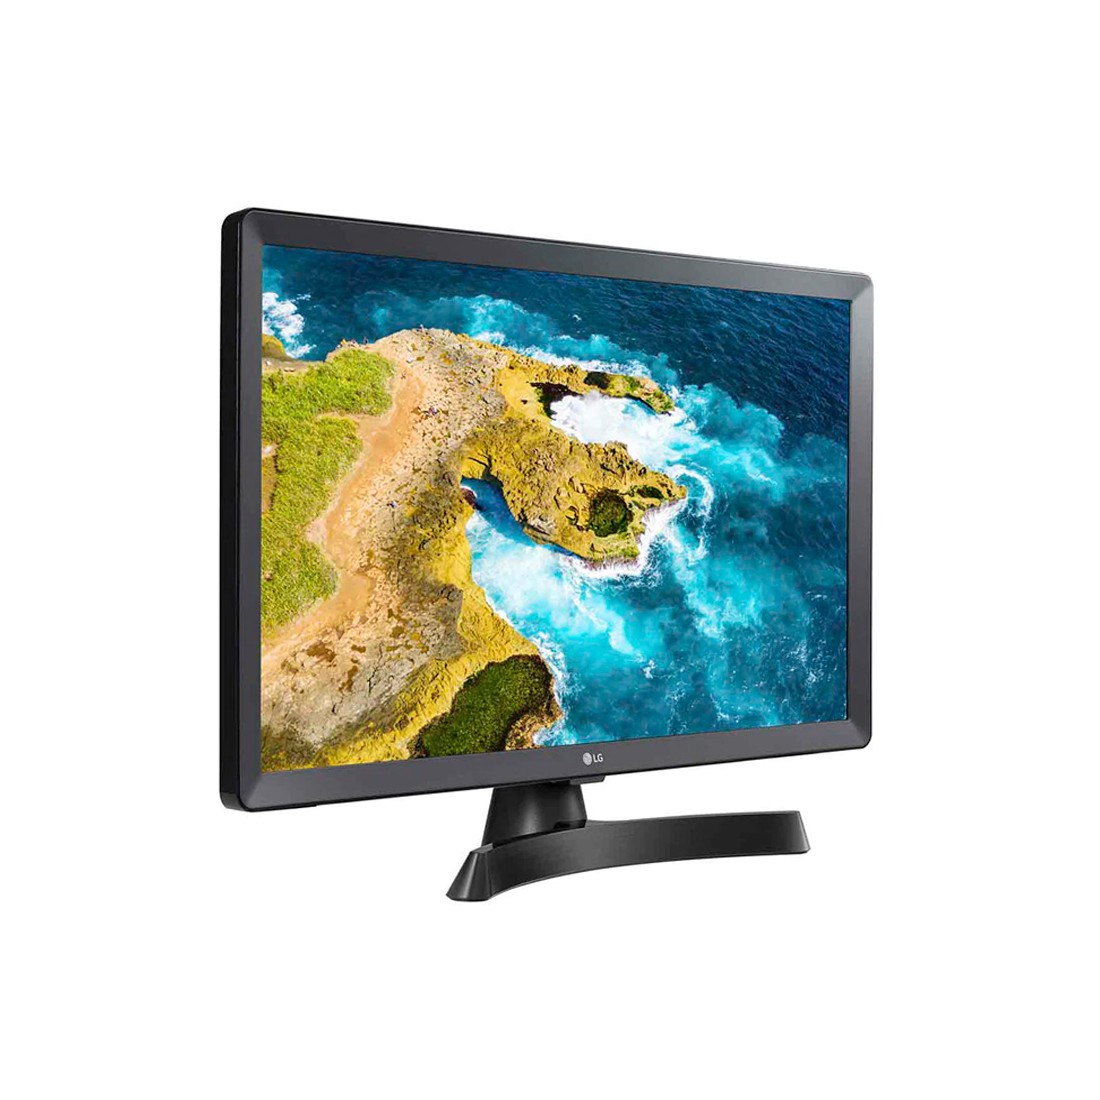 Interpretación insertar toma una foto Monitor TV - LG 24TQ510S-PZ, 24 pulgadas, Negro, SmartTV